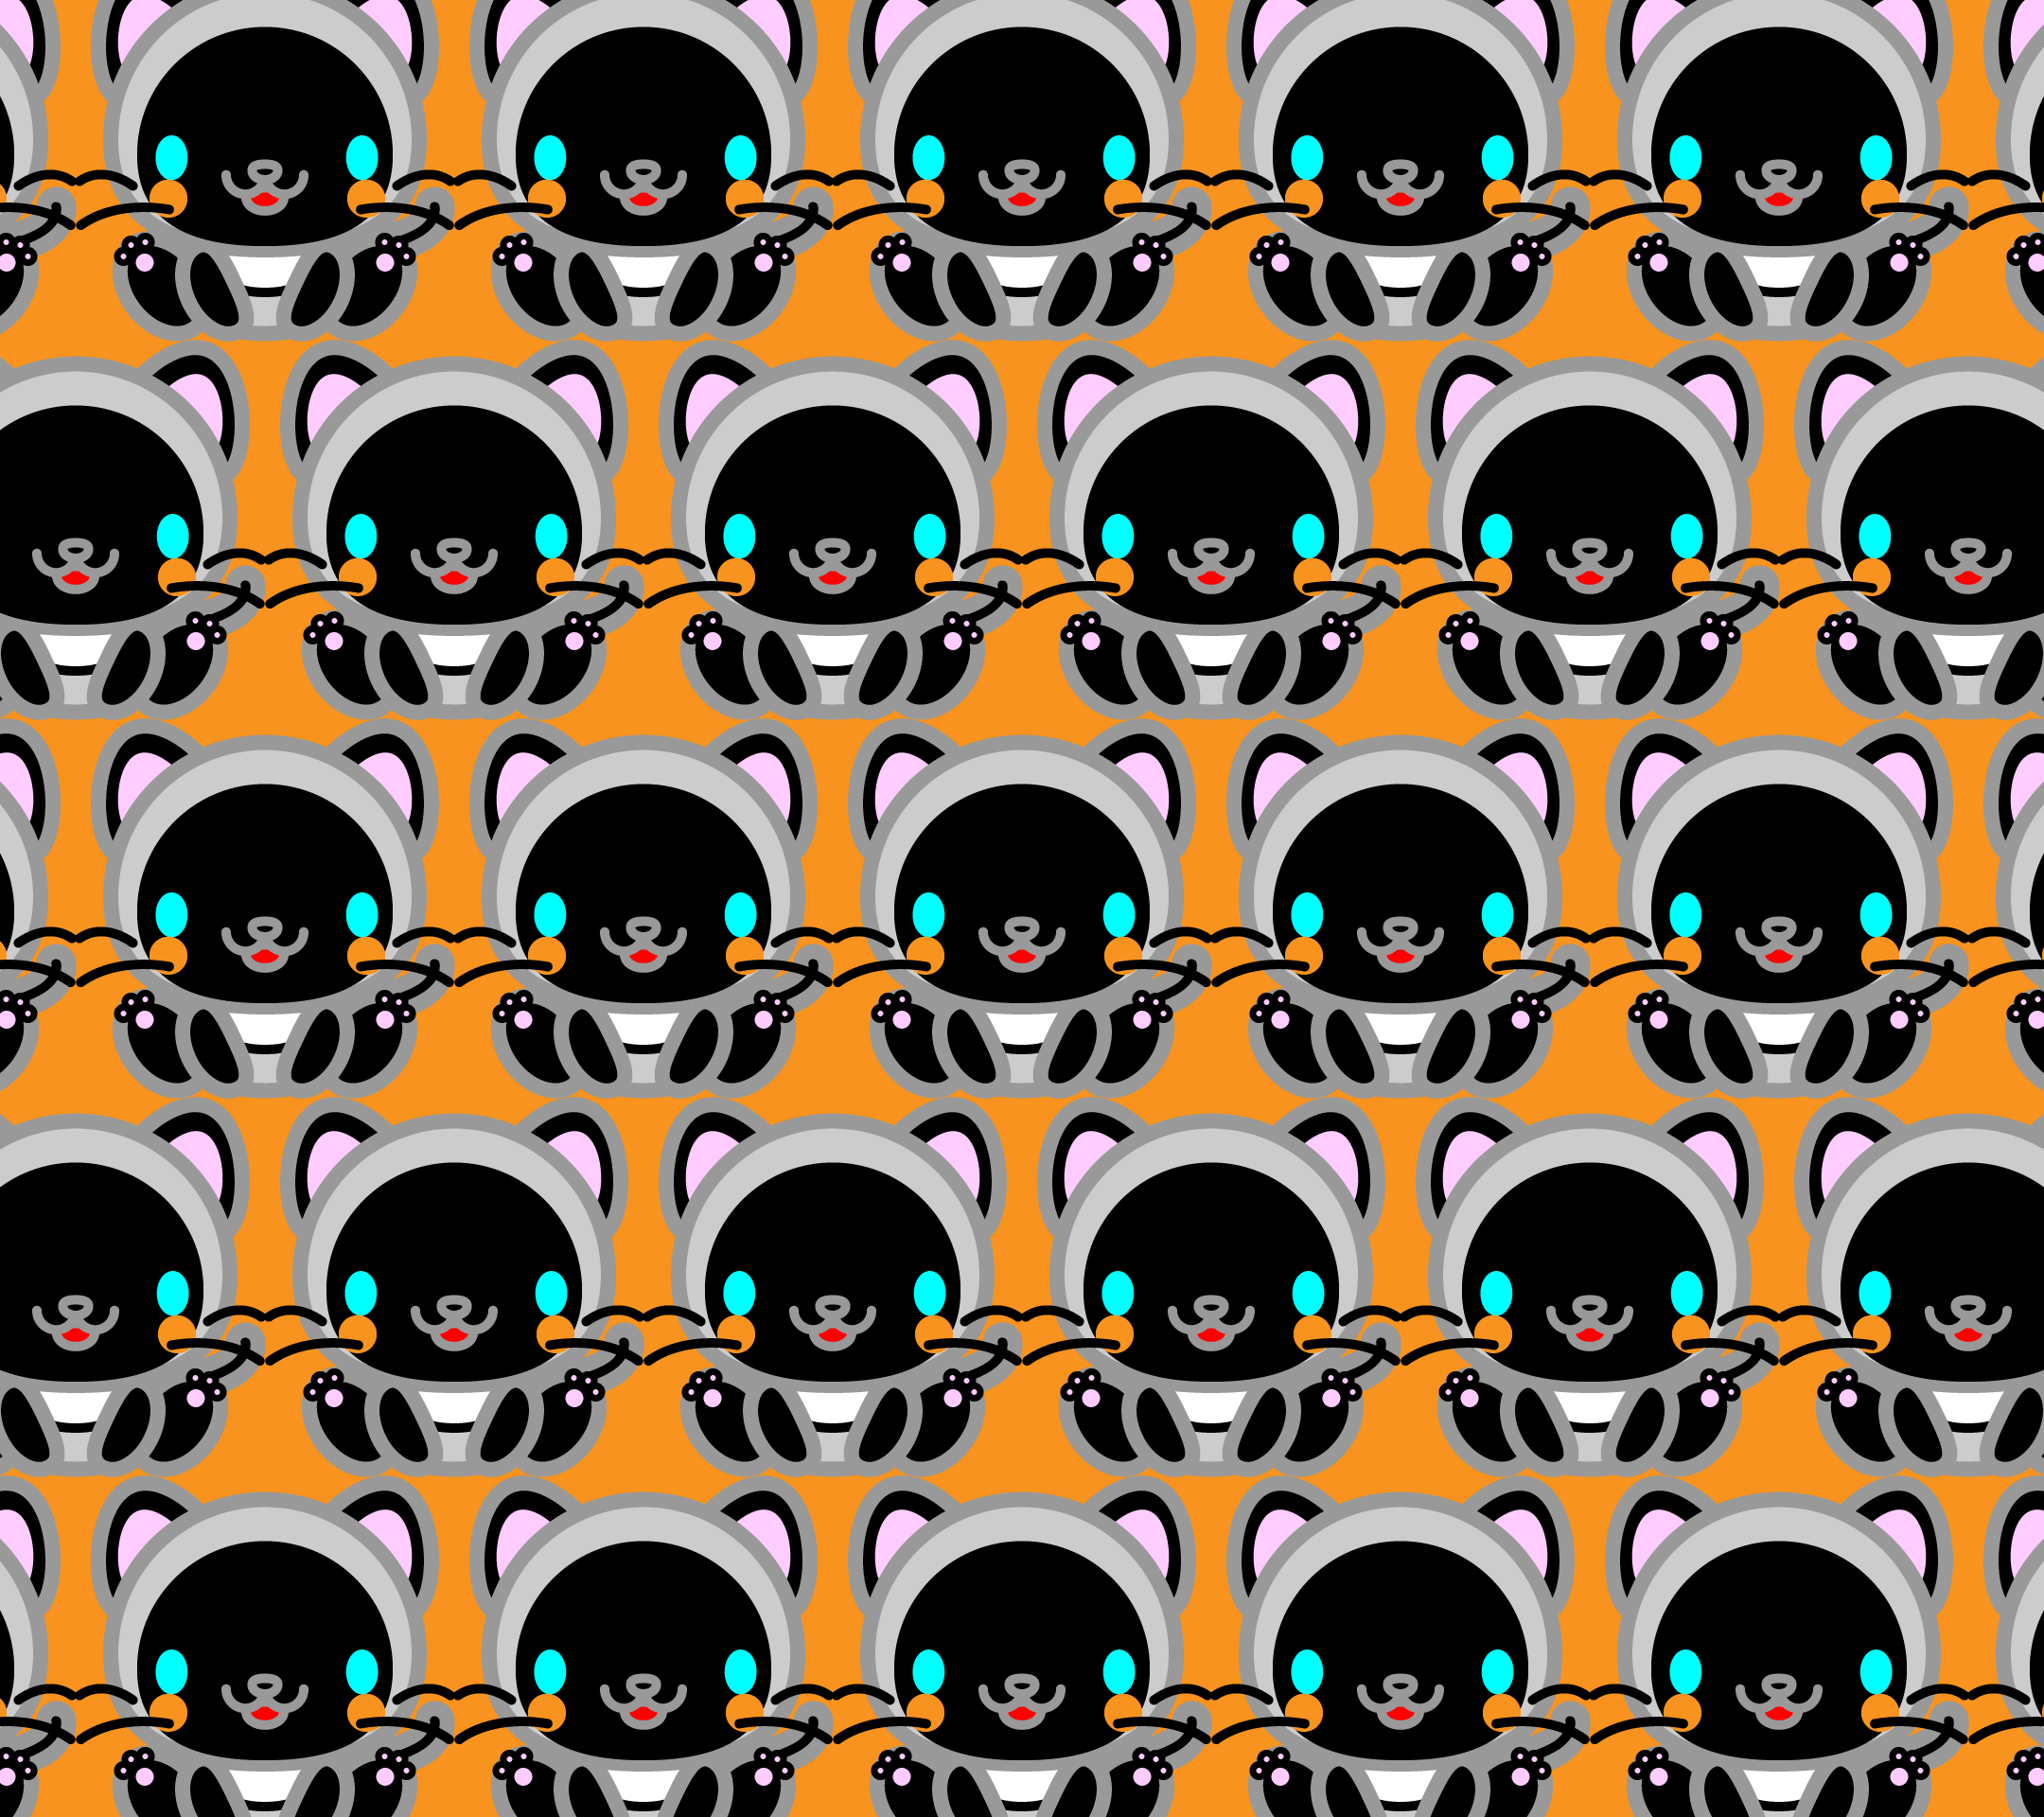 wallpaper4_sitsiamesecat-fiill-orange-android